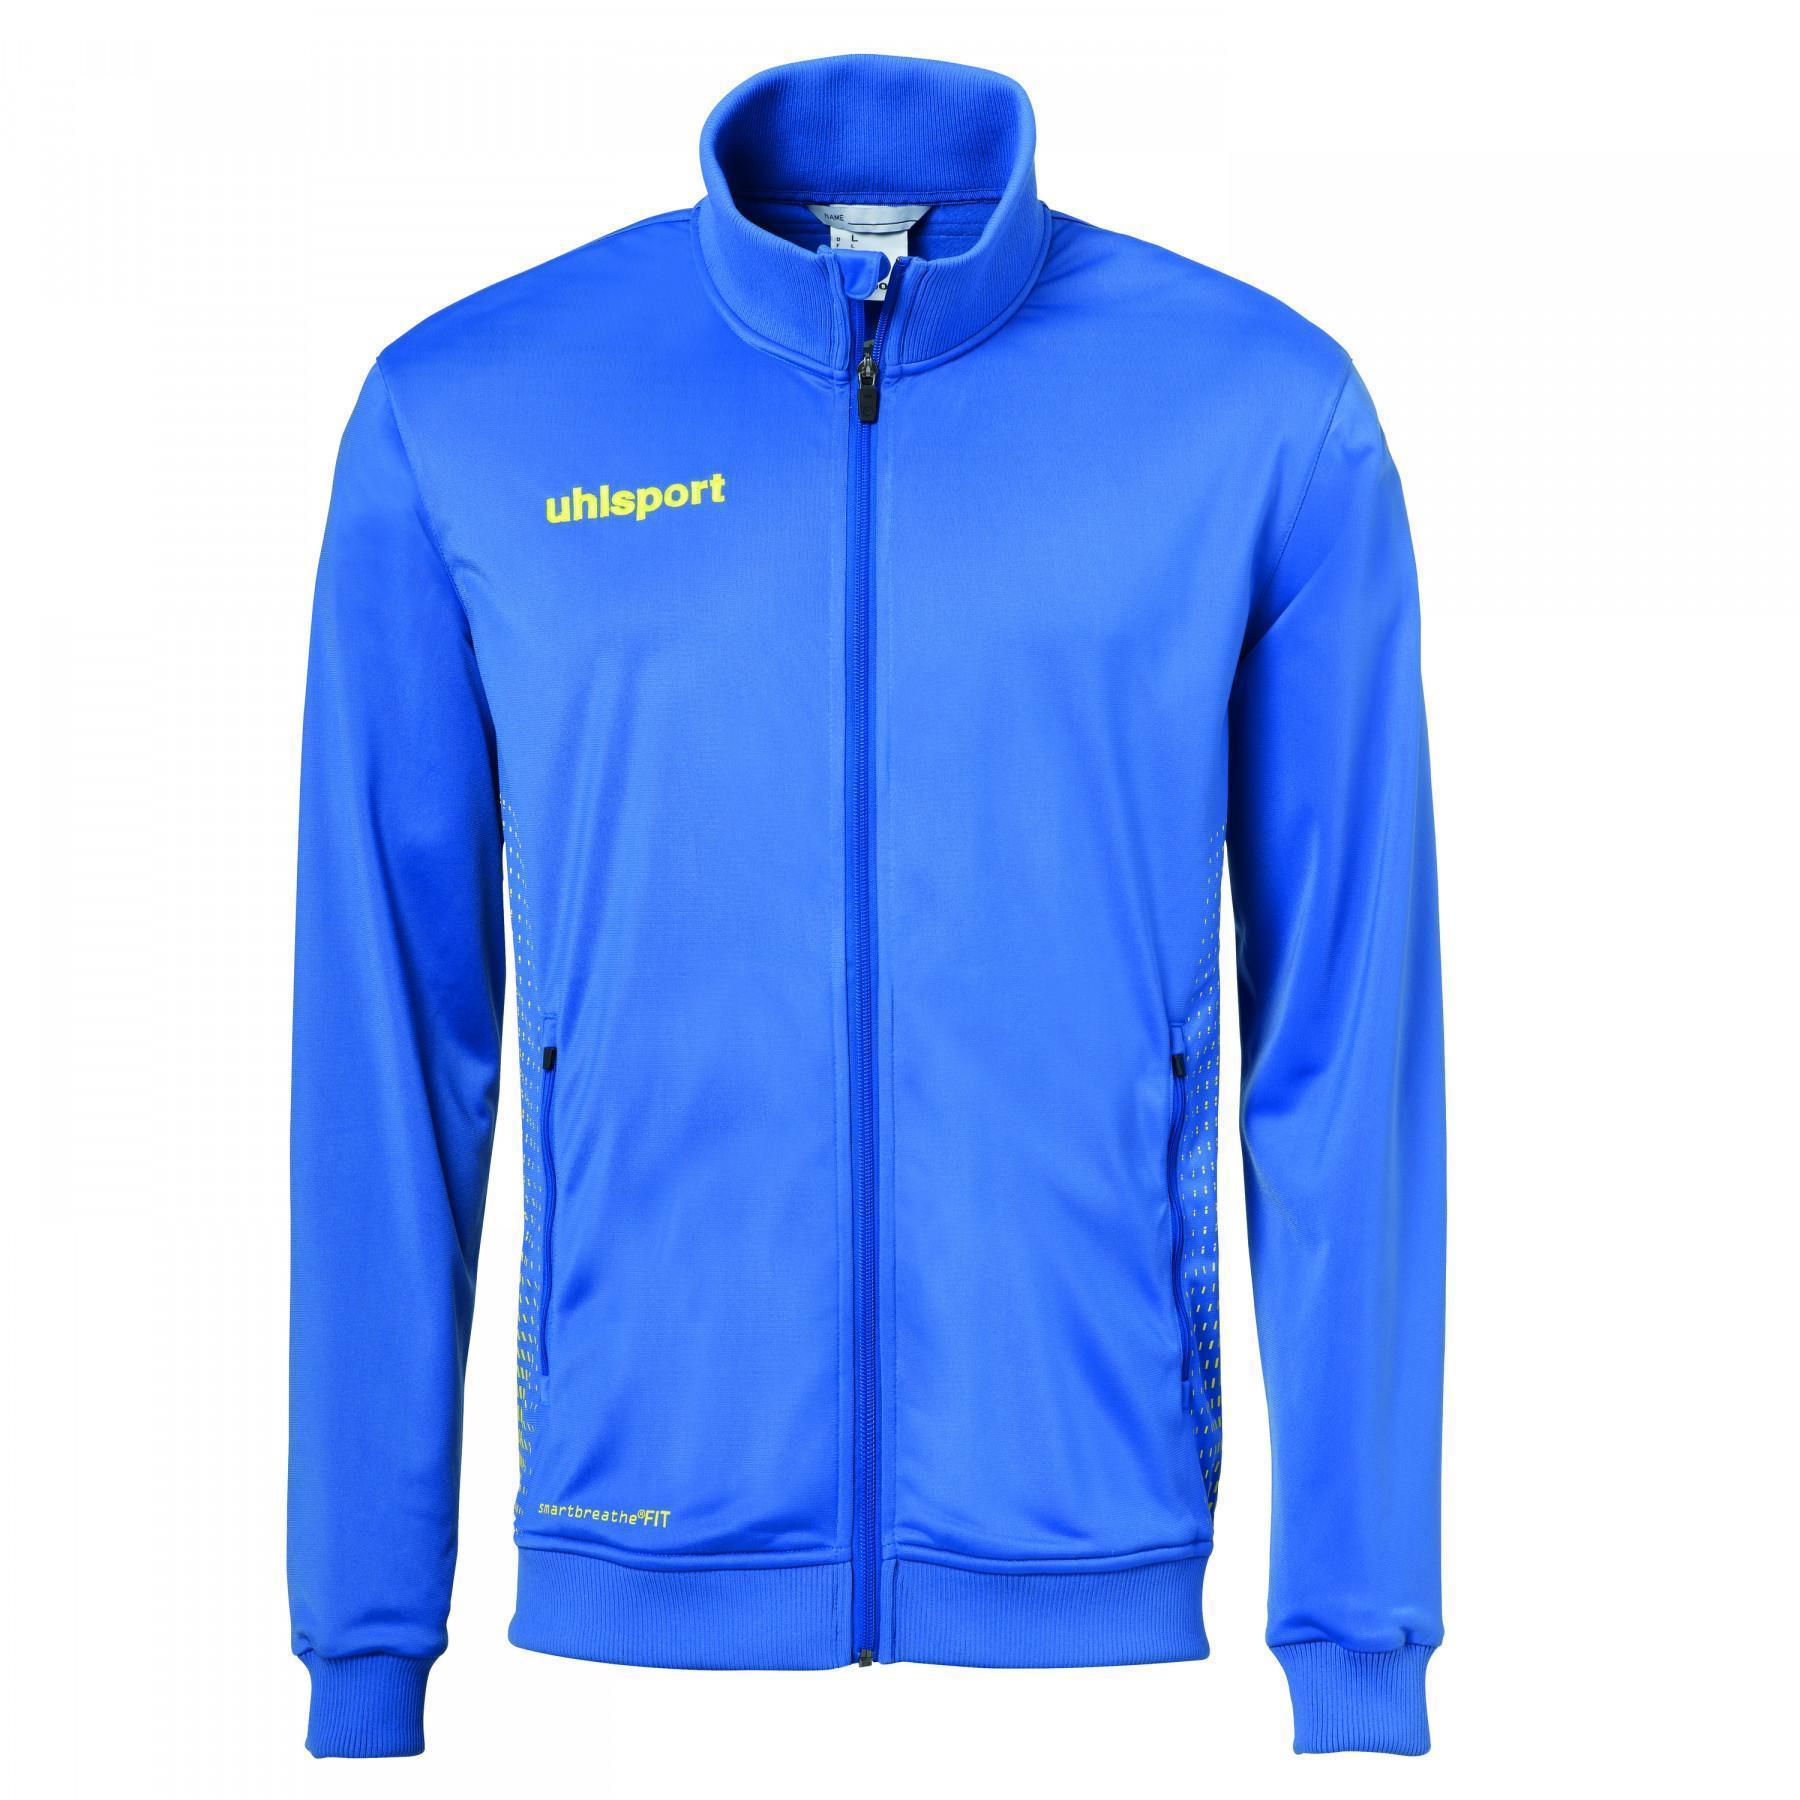 Uhlsport Mens Goal Sports Football Waterproof Rain Zip Jacket Top Blue Navy 